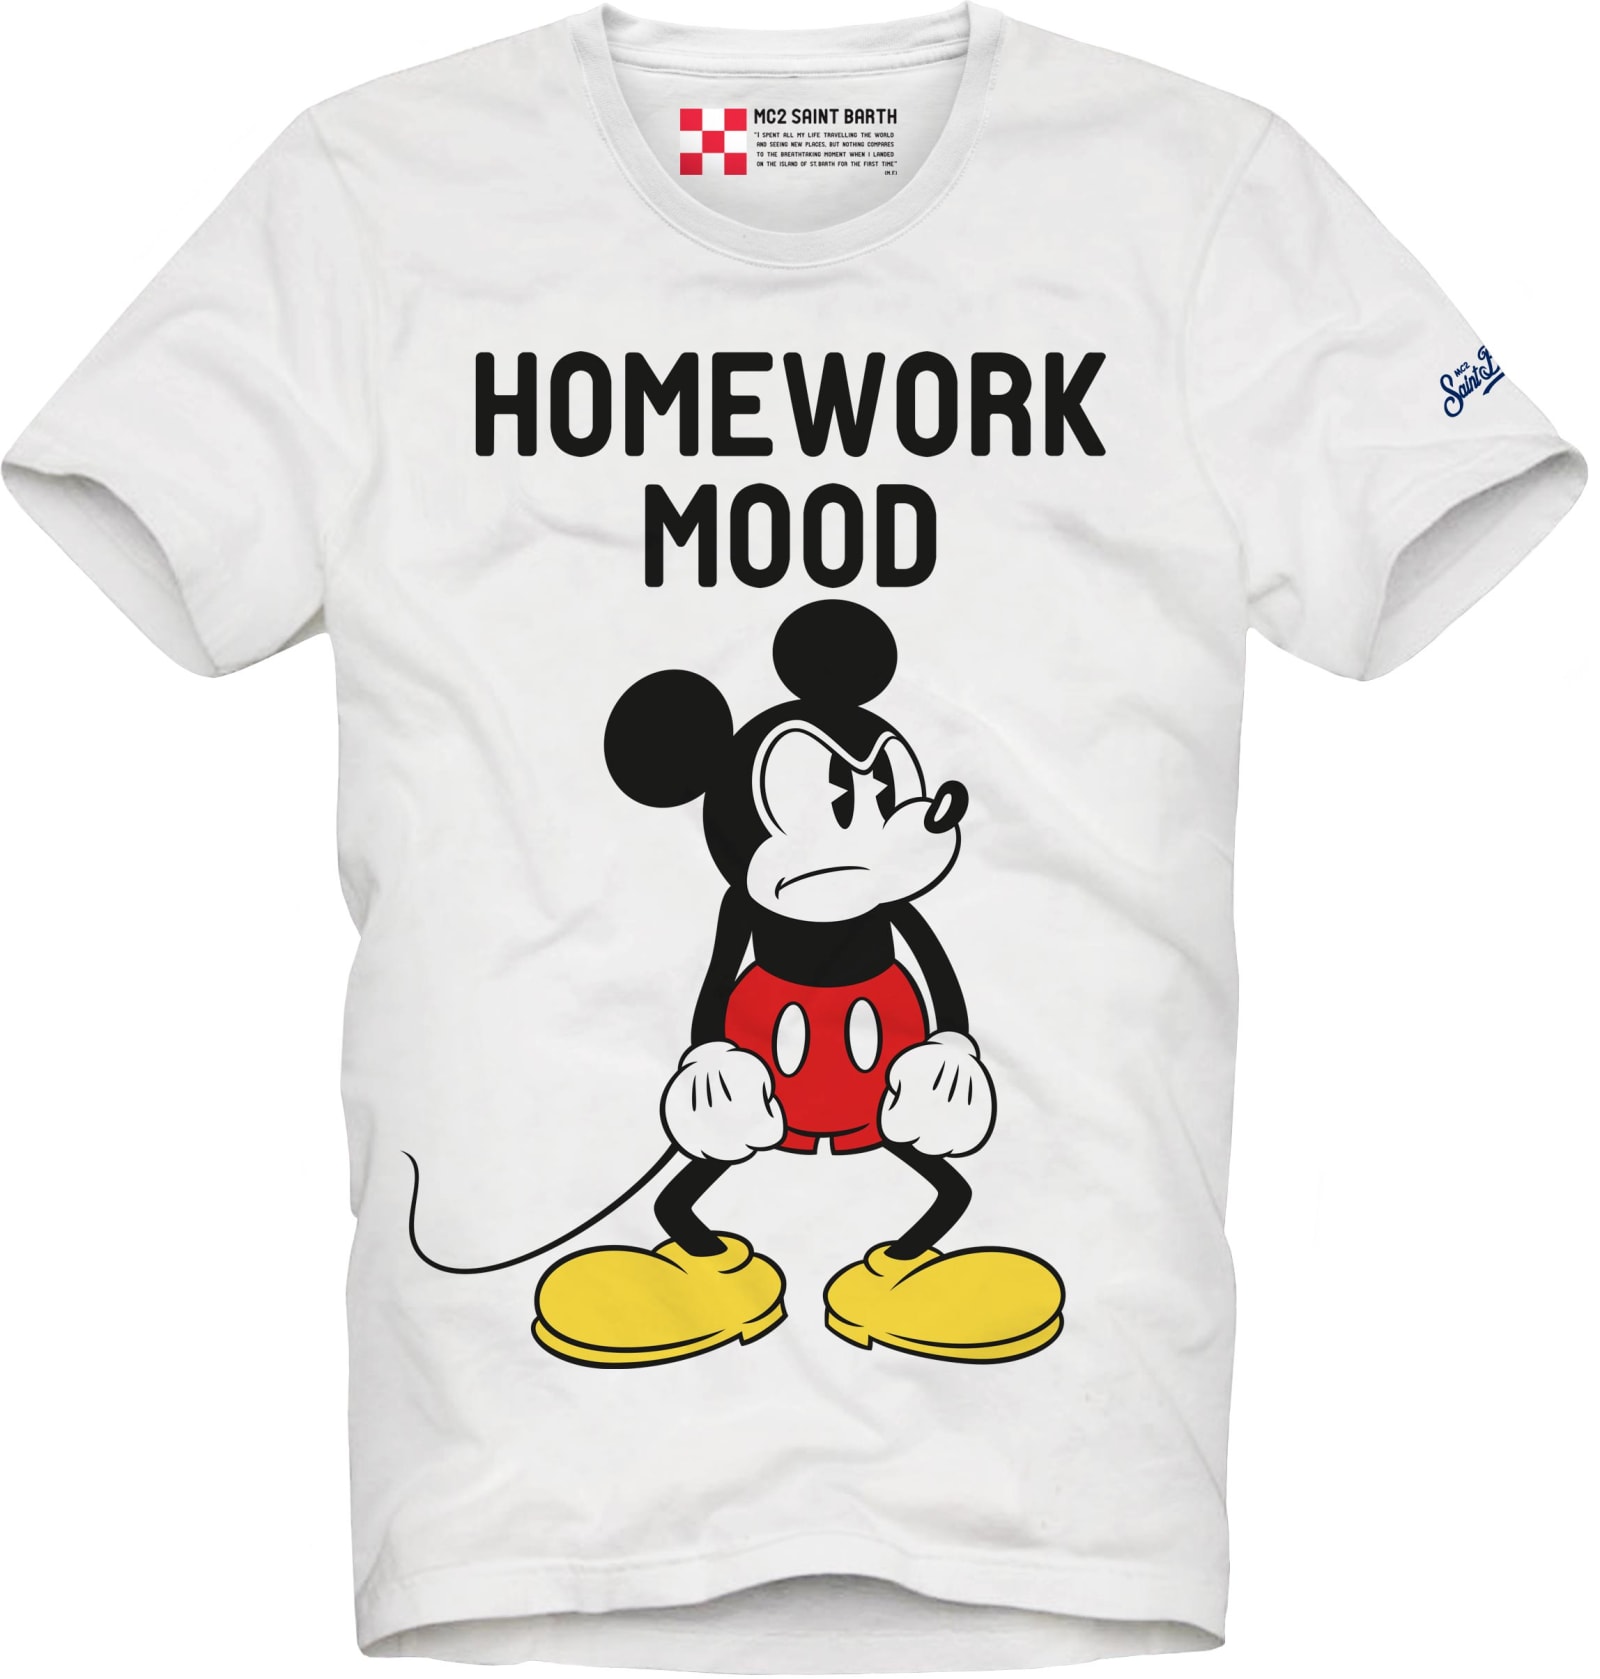 MC2 Saint Barth Mickey Mouse T-shirt Boy Homework Mood